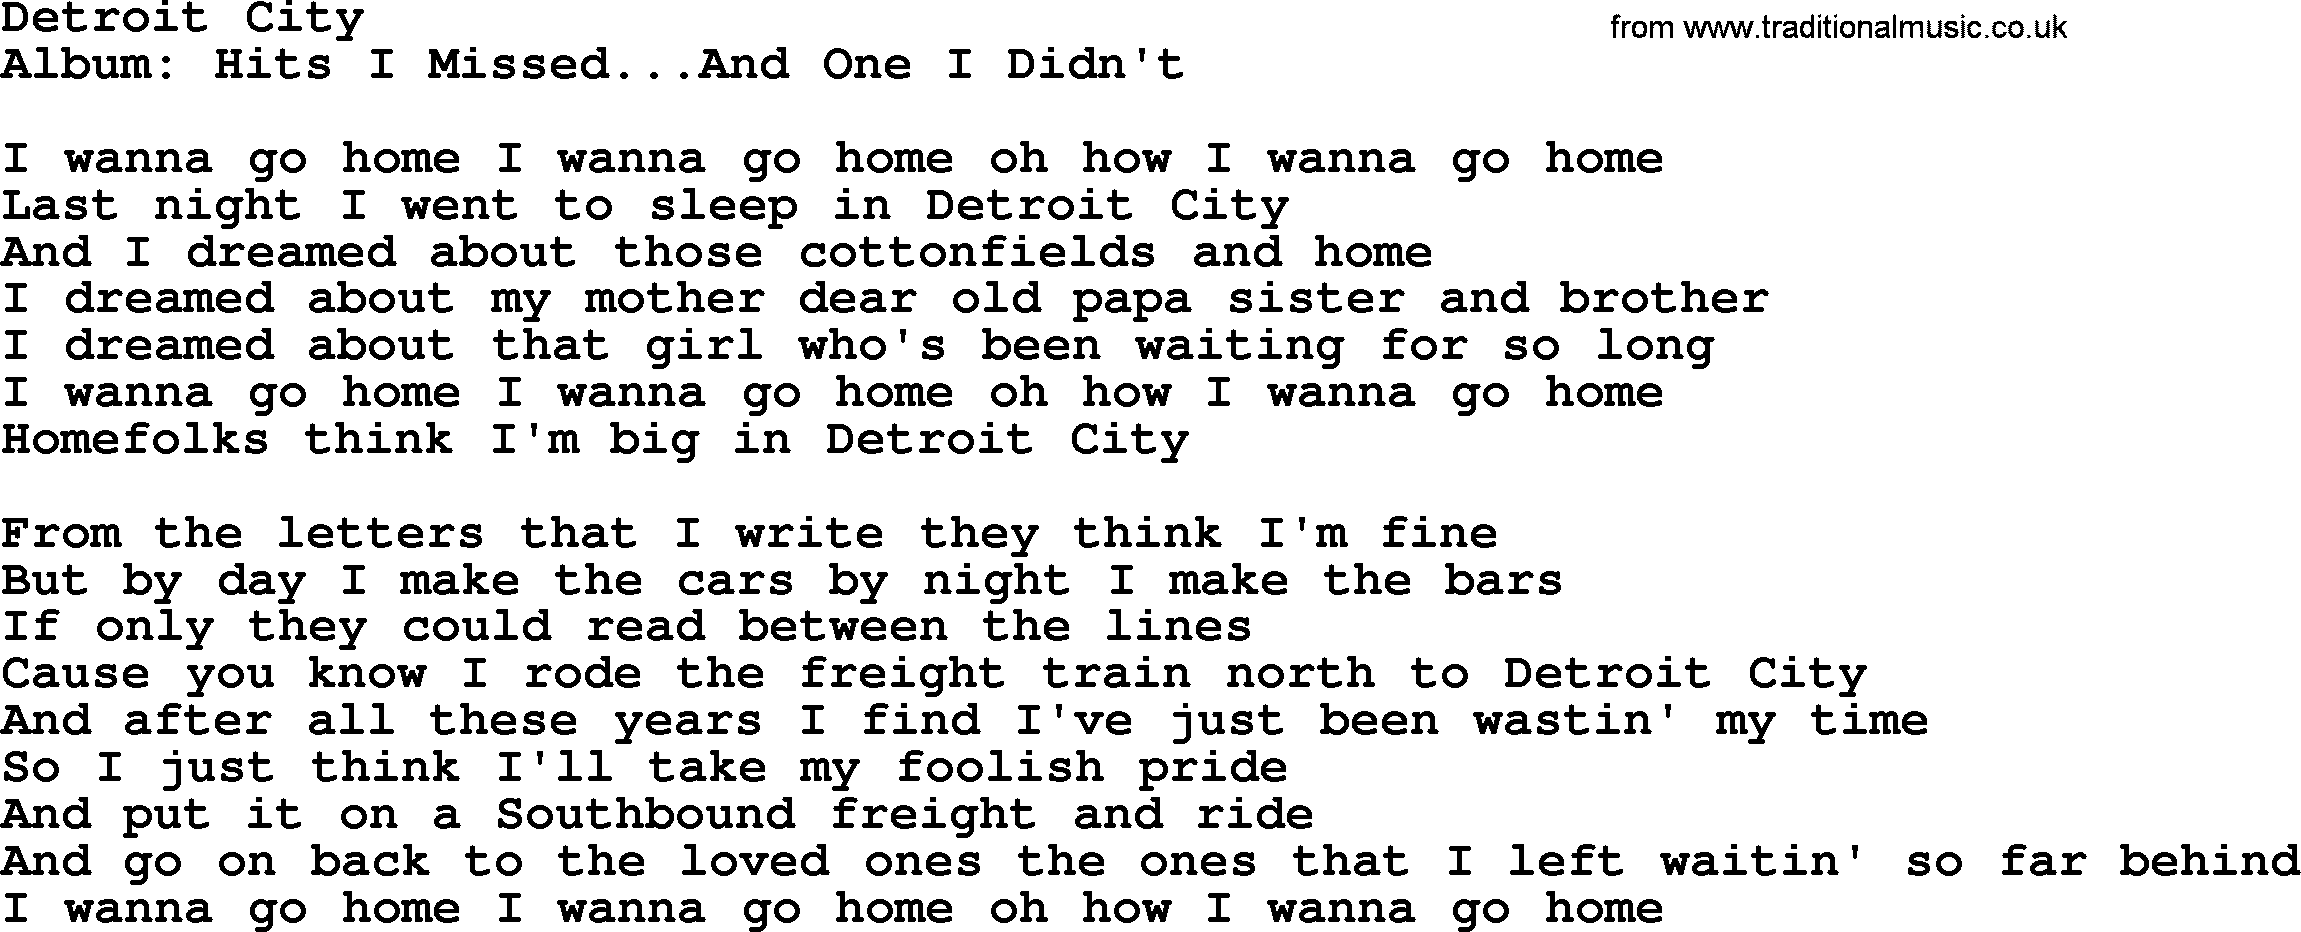 George Jones song: Detroit City, lyrics